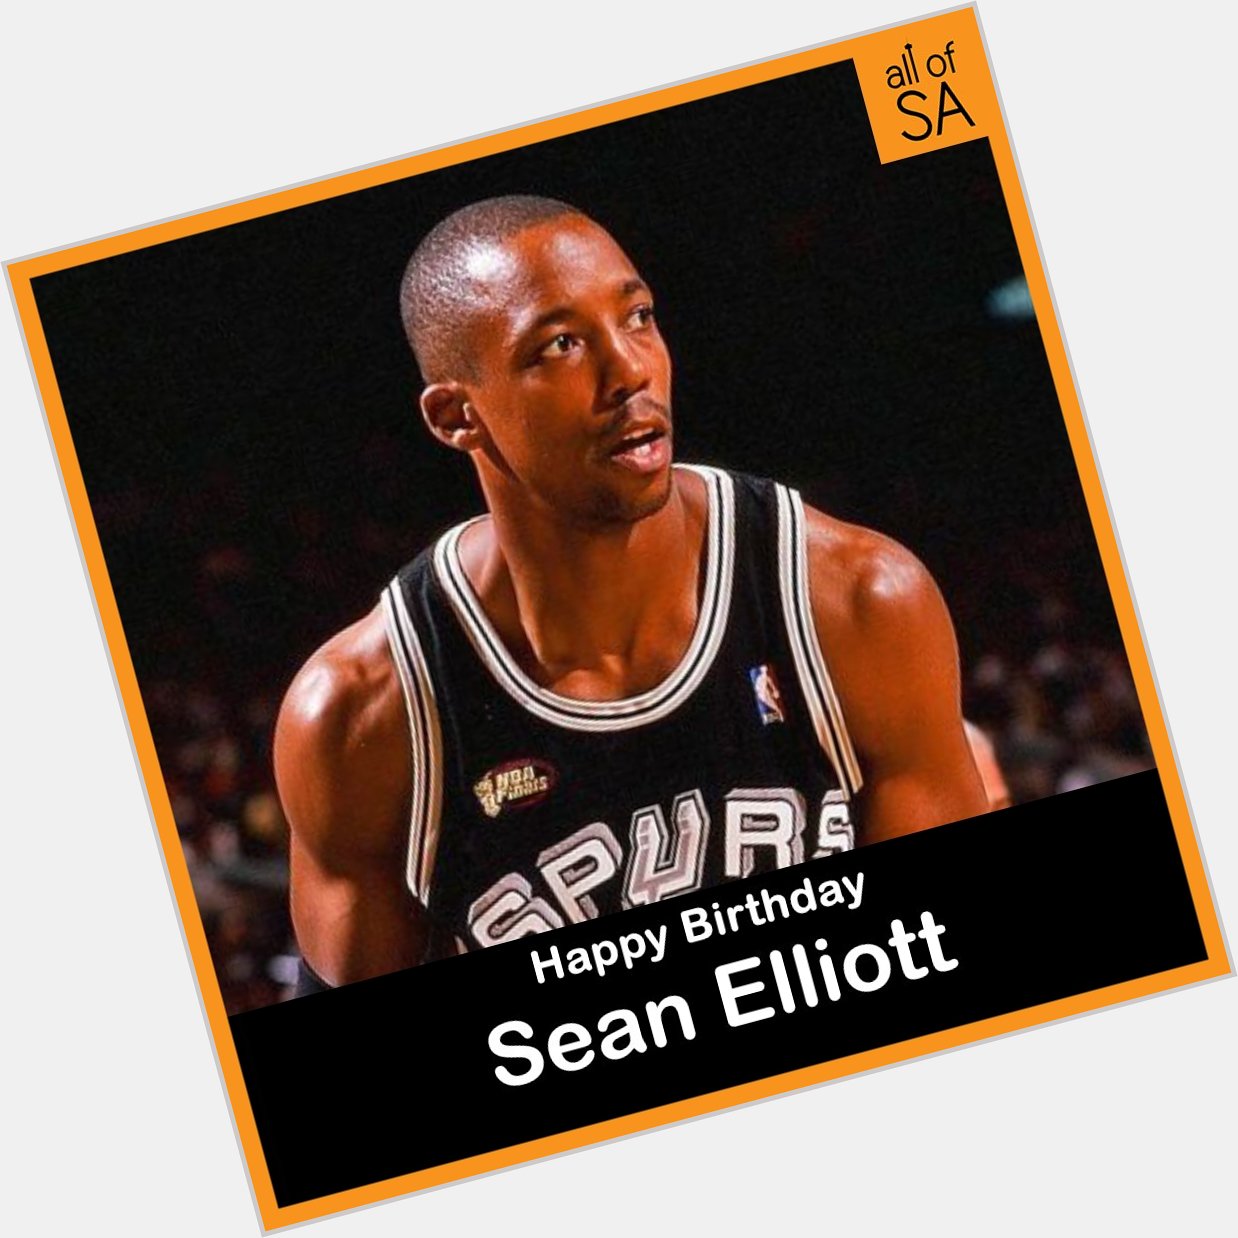 Join us in wishing a happy birthday to Sean Elliott! 